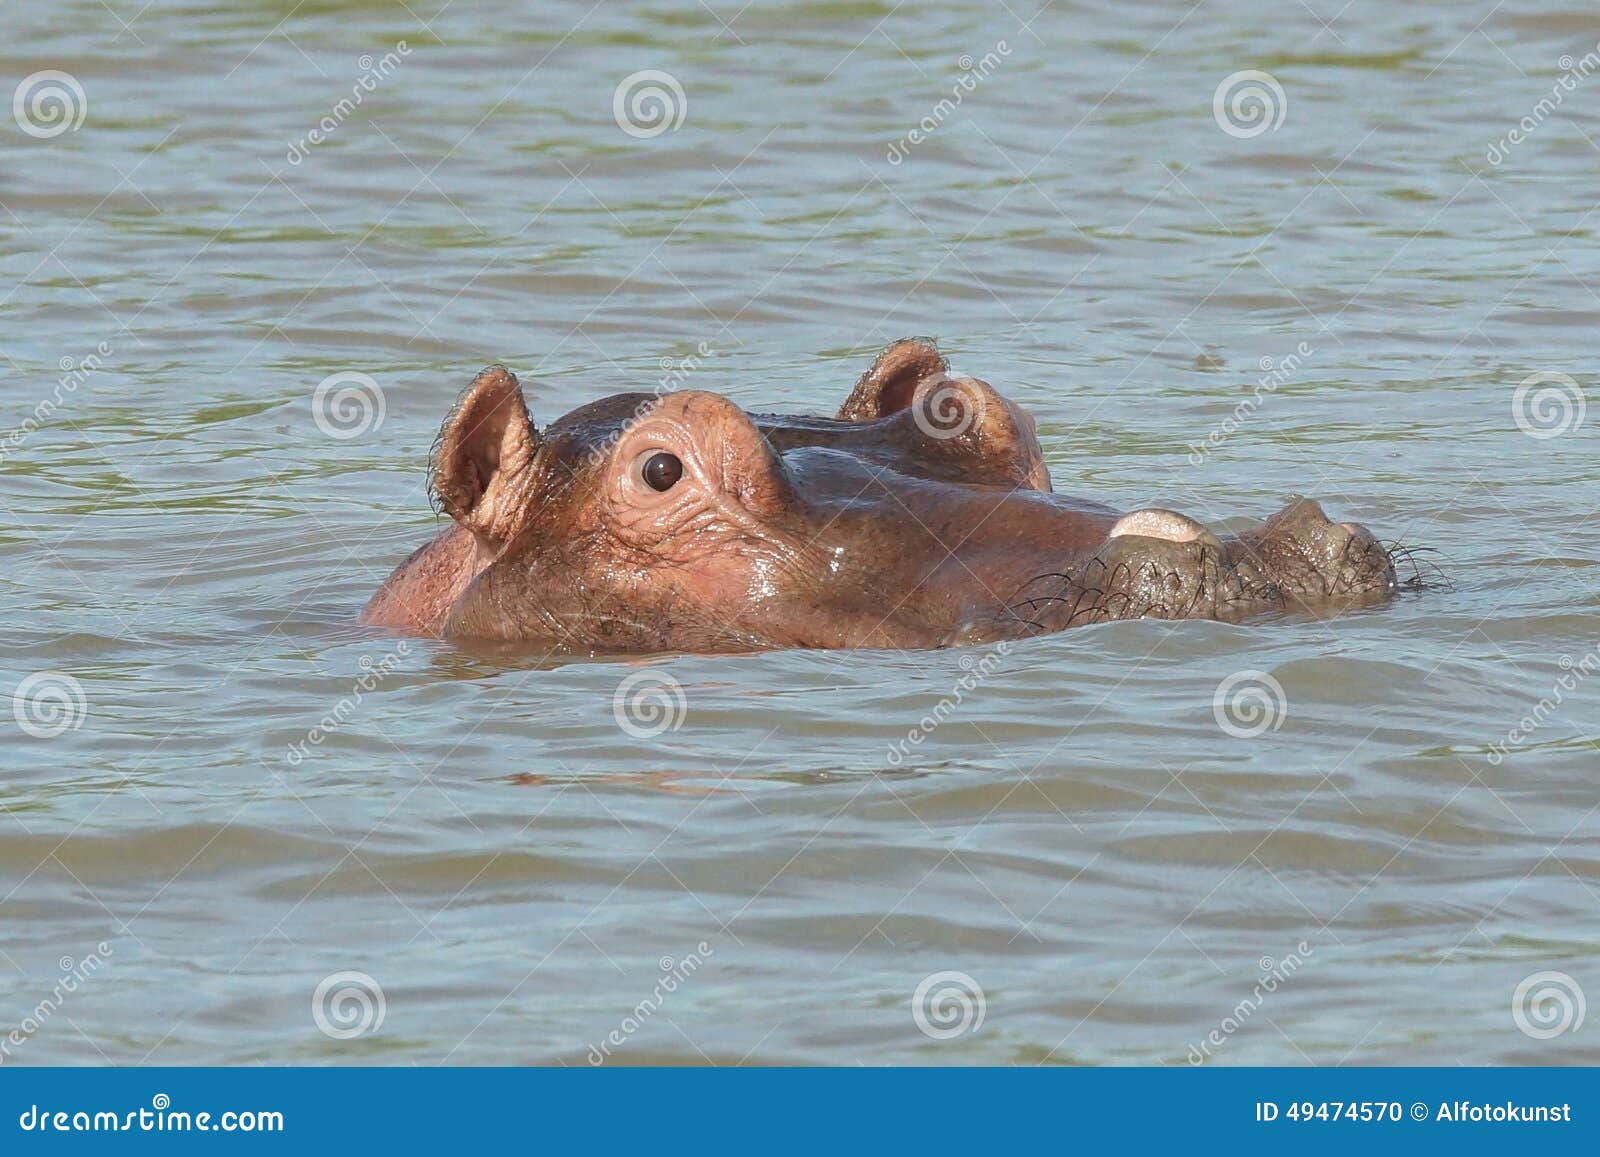 hippo, lake chamo, ethiopia, africa